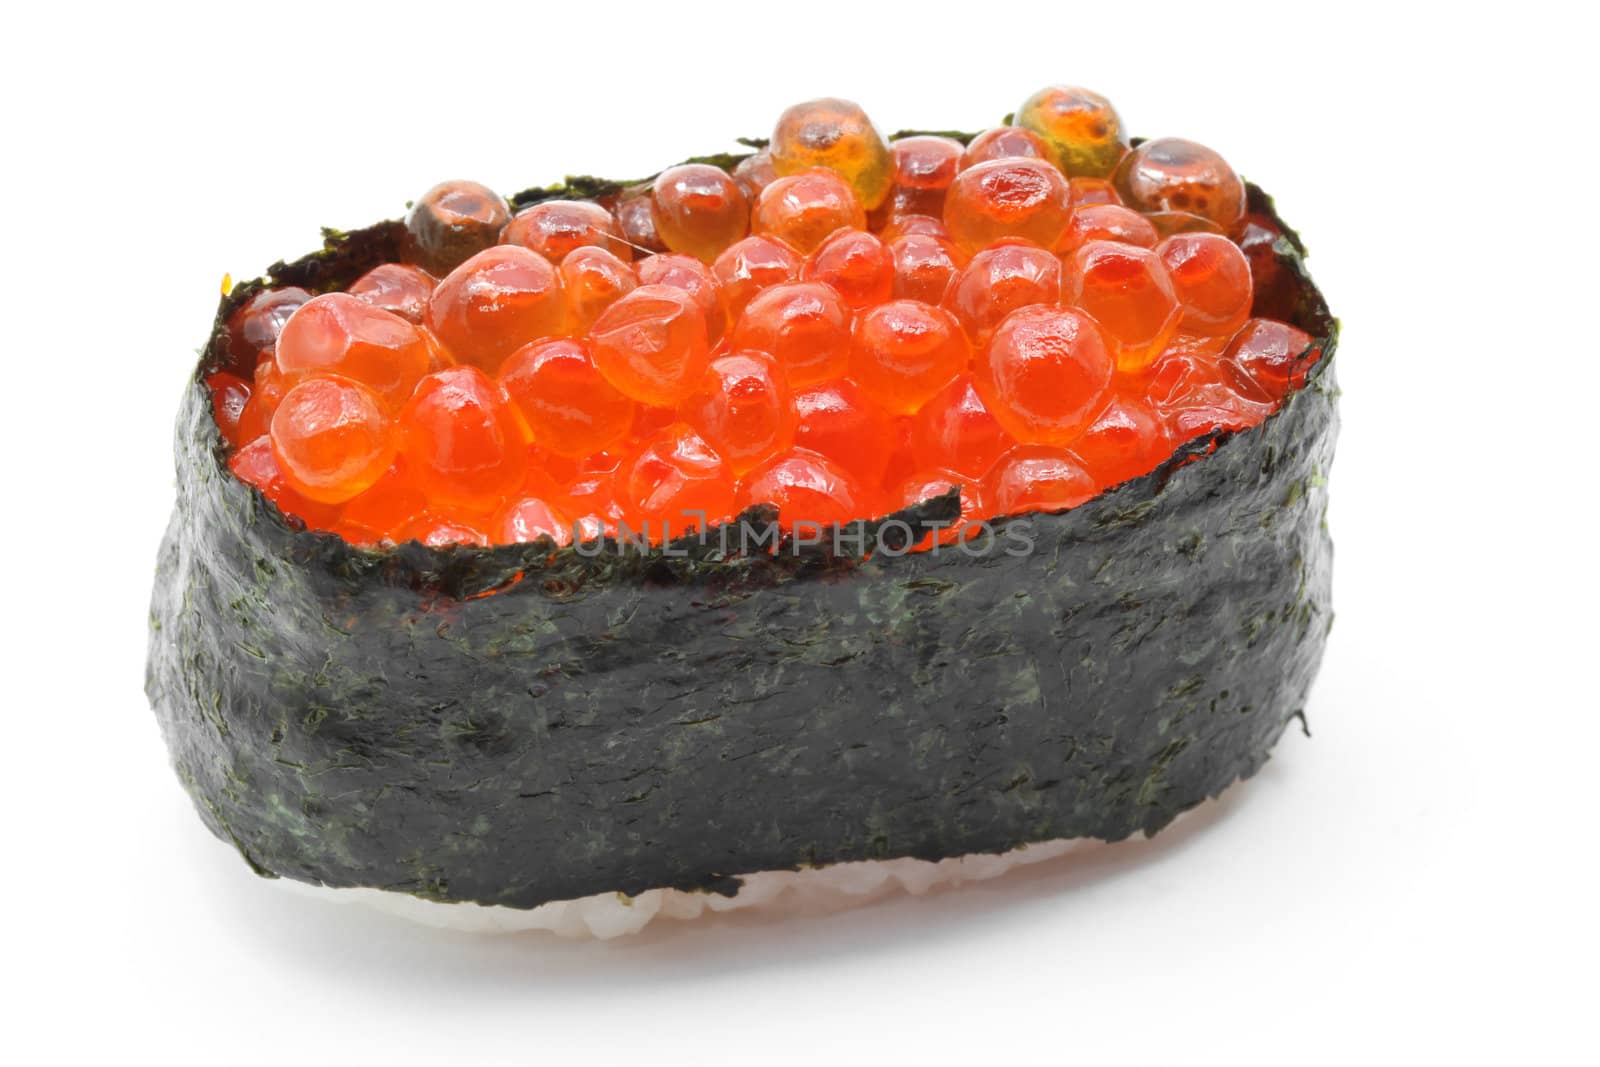 ikura salmon egg roll sushi by vichie81